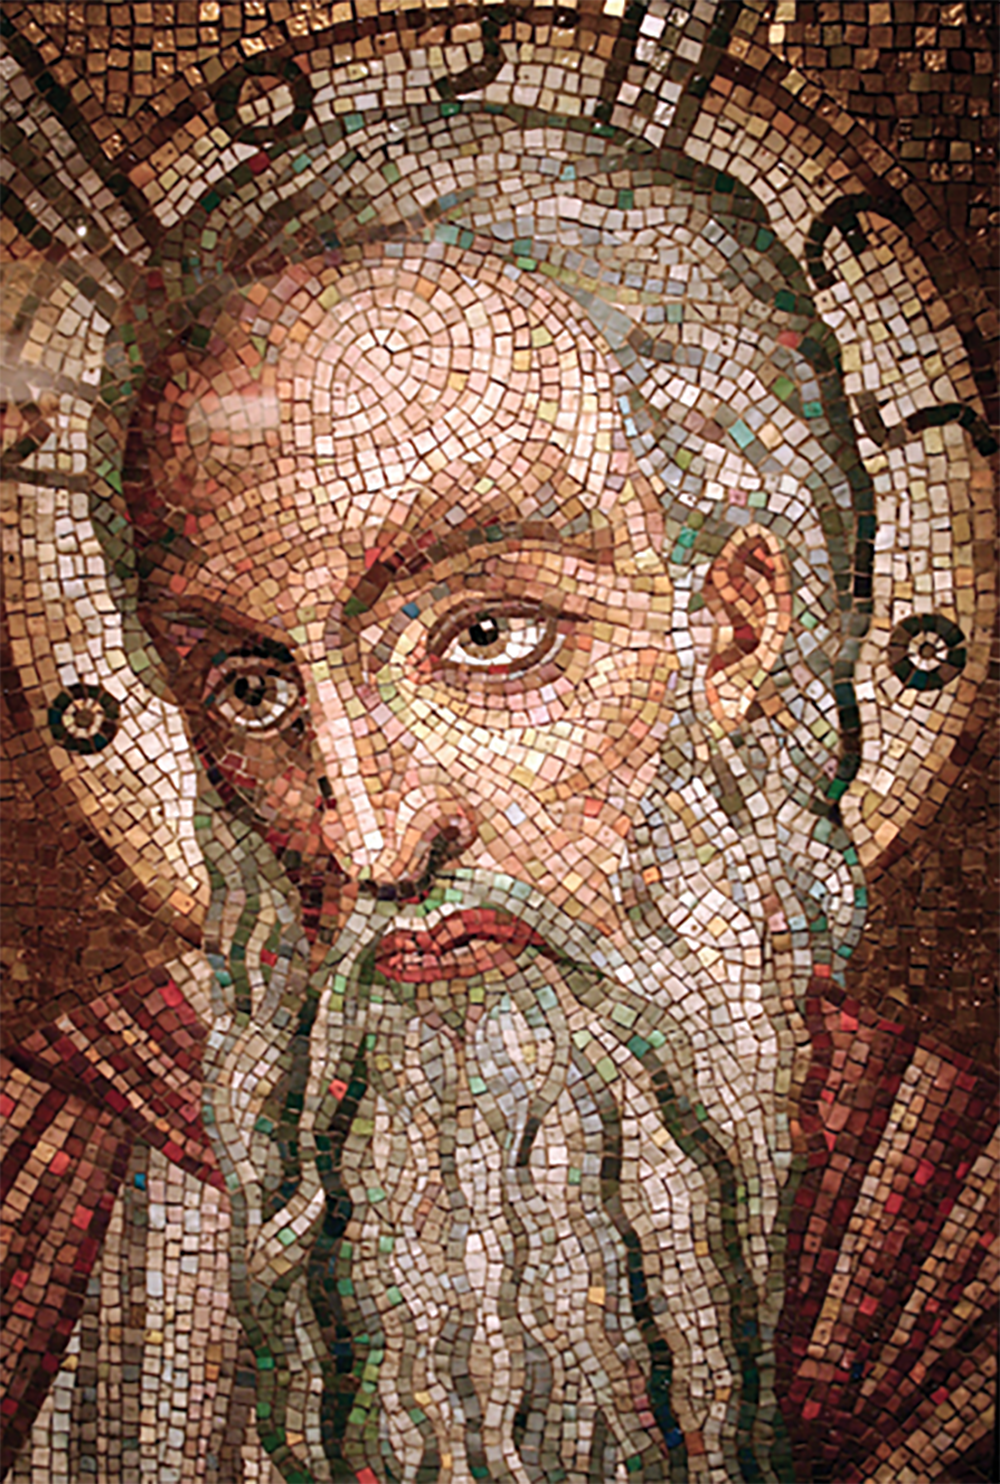 Moses mosaic on display at the Cathedral Basilica of Saint Louis